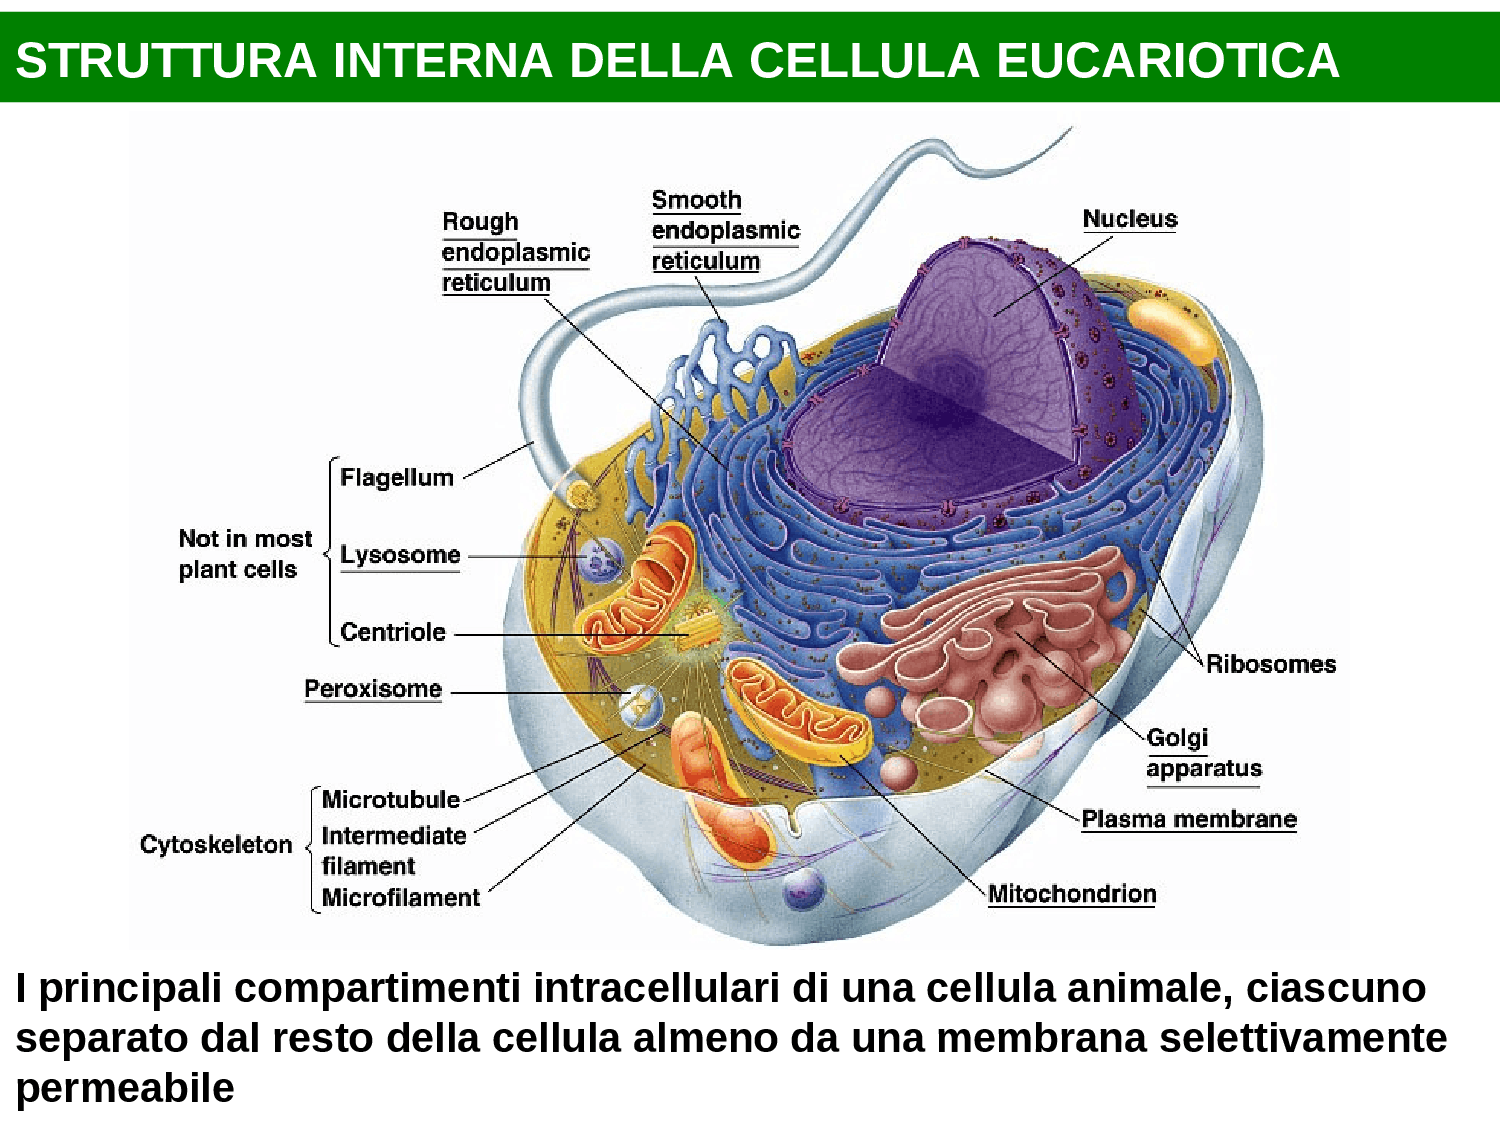 La Cellula Eucariotica